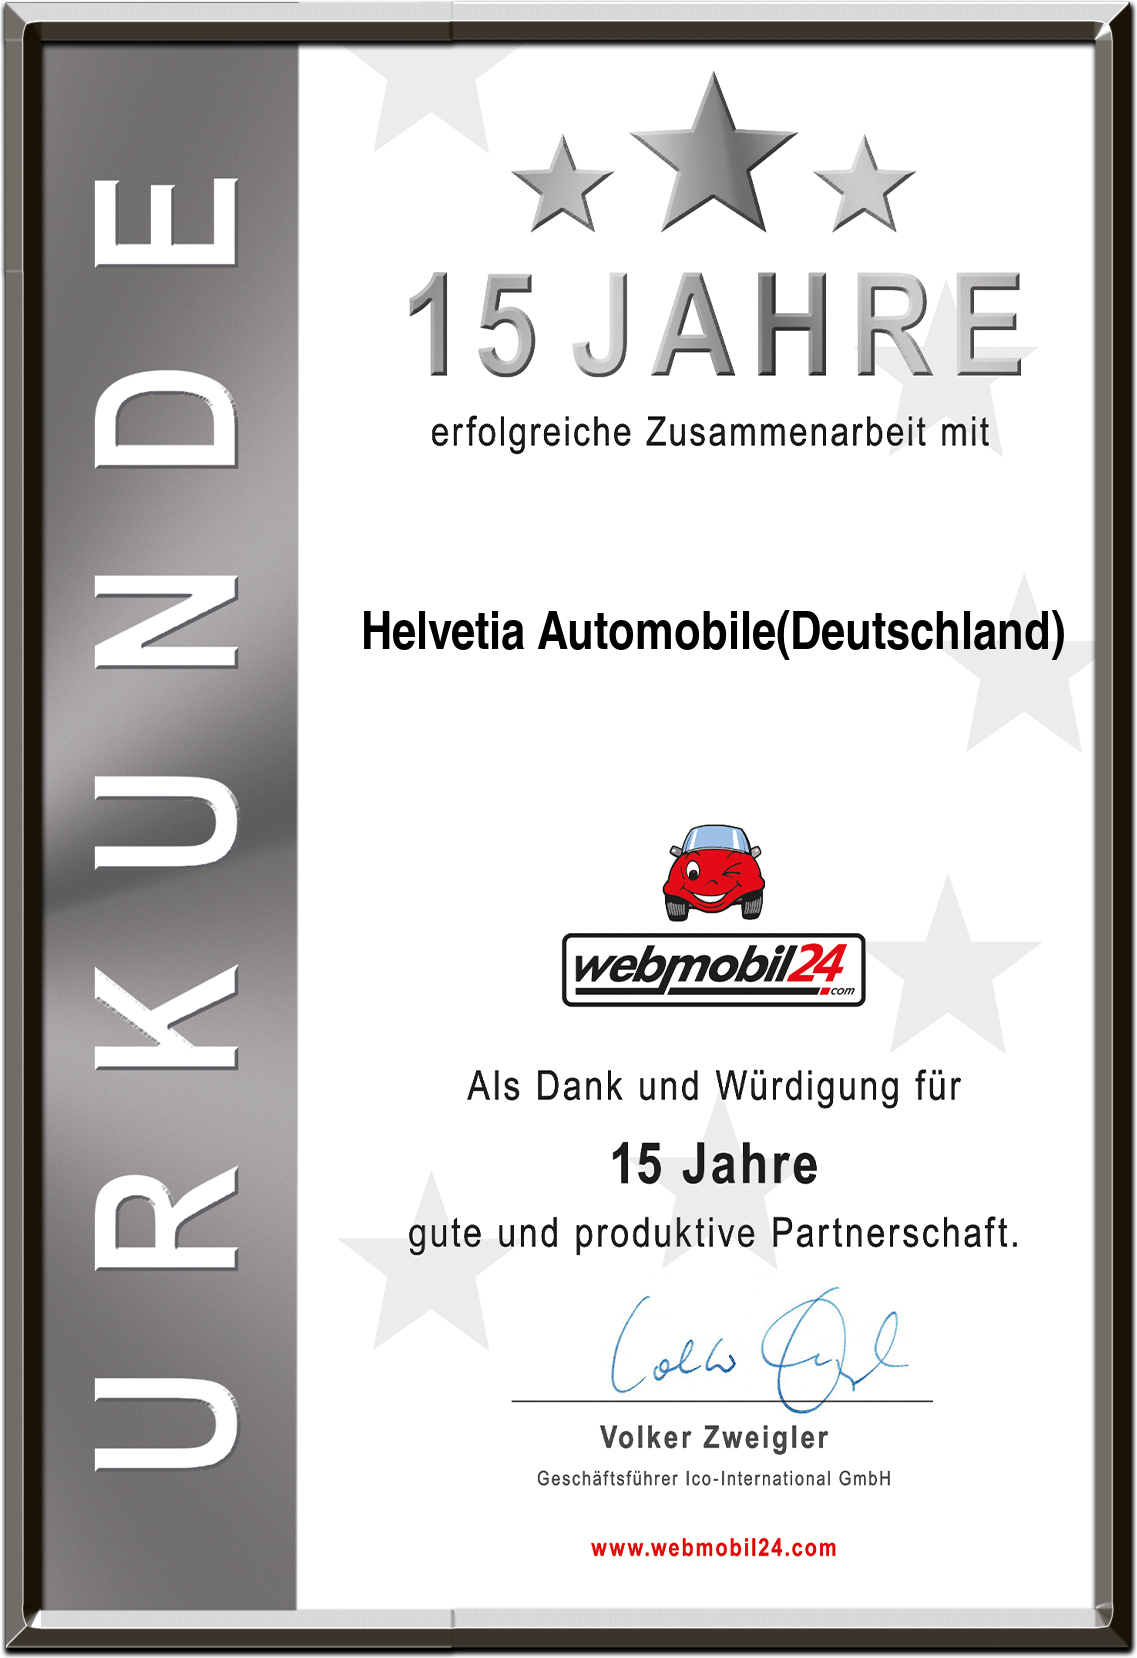 Helvetia Automobile(Deutschland)